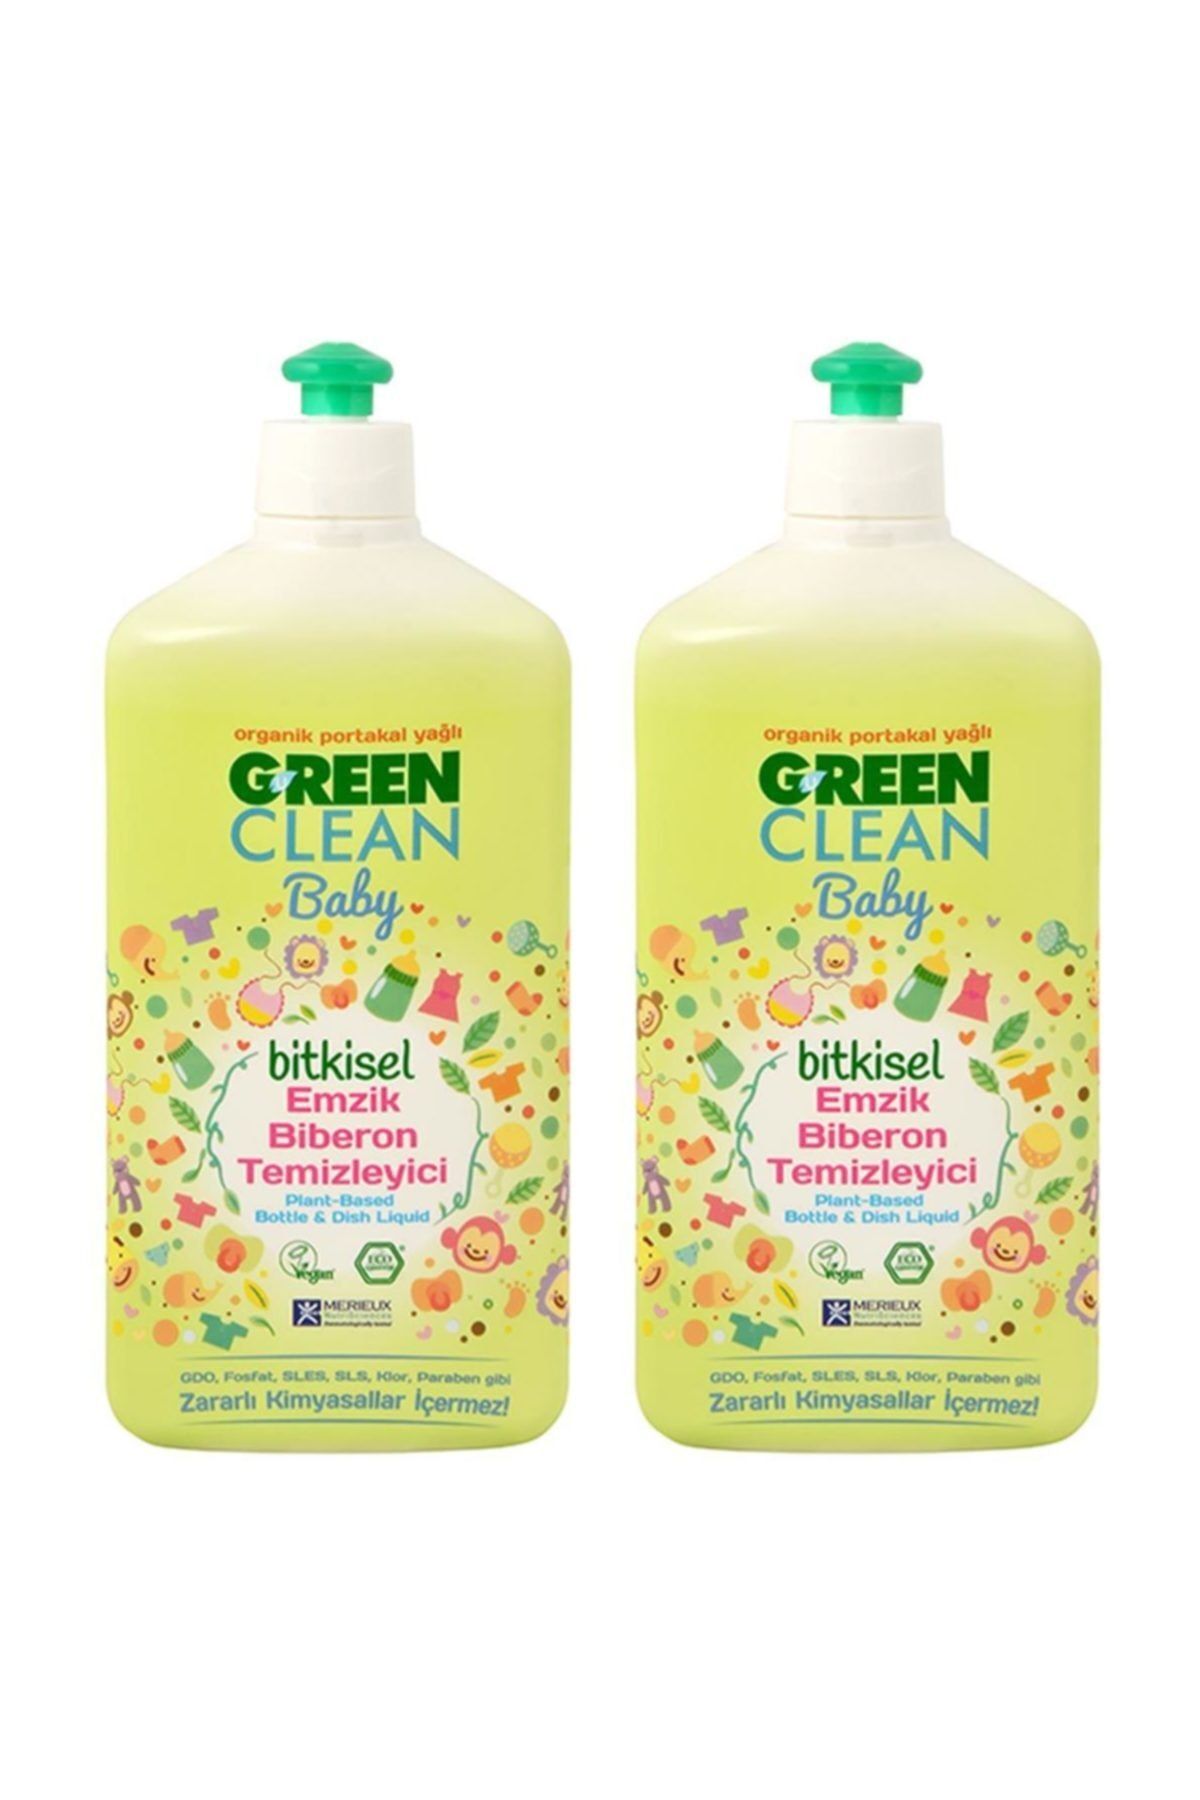 Green Clean Organik Portakal Yağlı Baby Biberon Emzik Temizleyici 500 ml - 2'li set